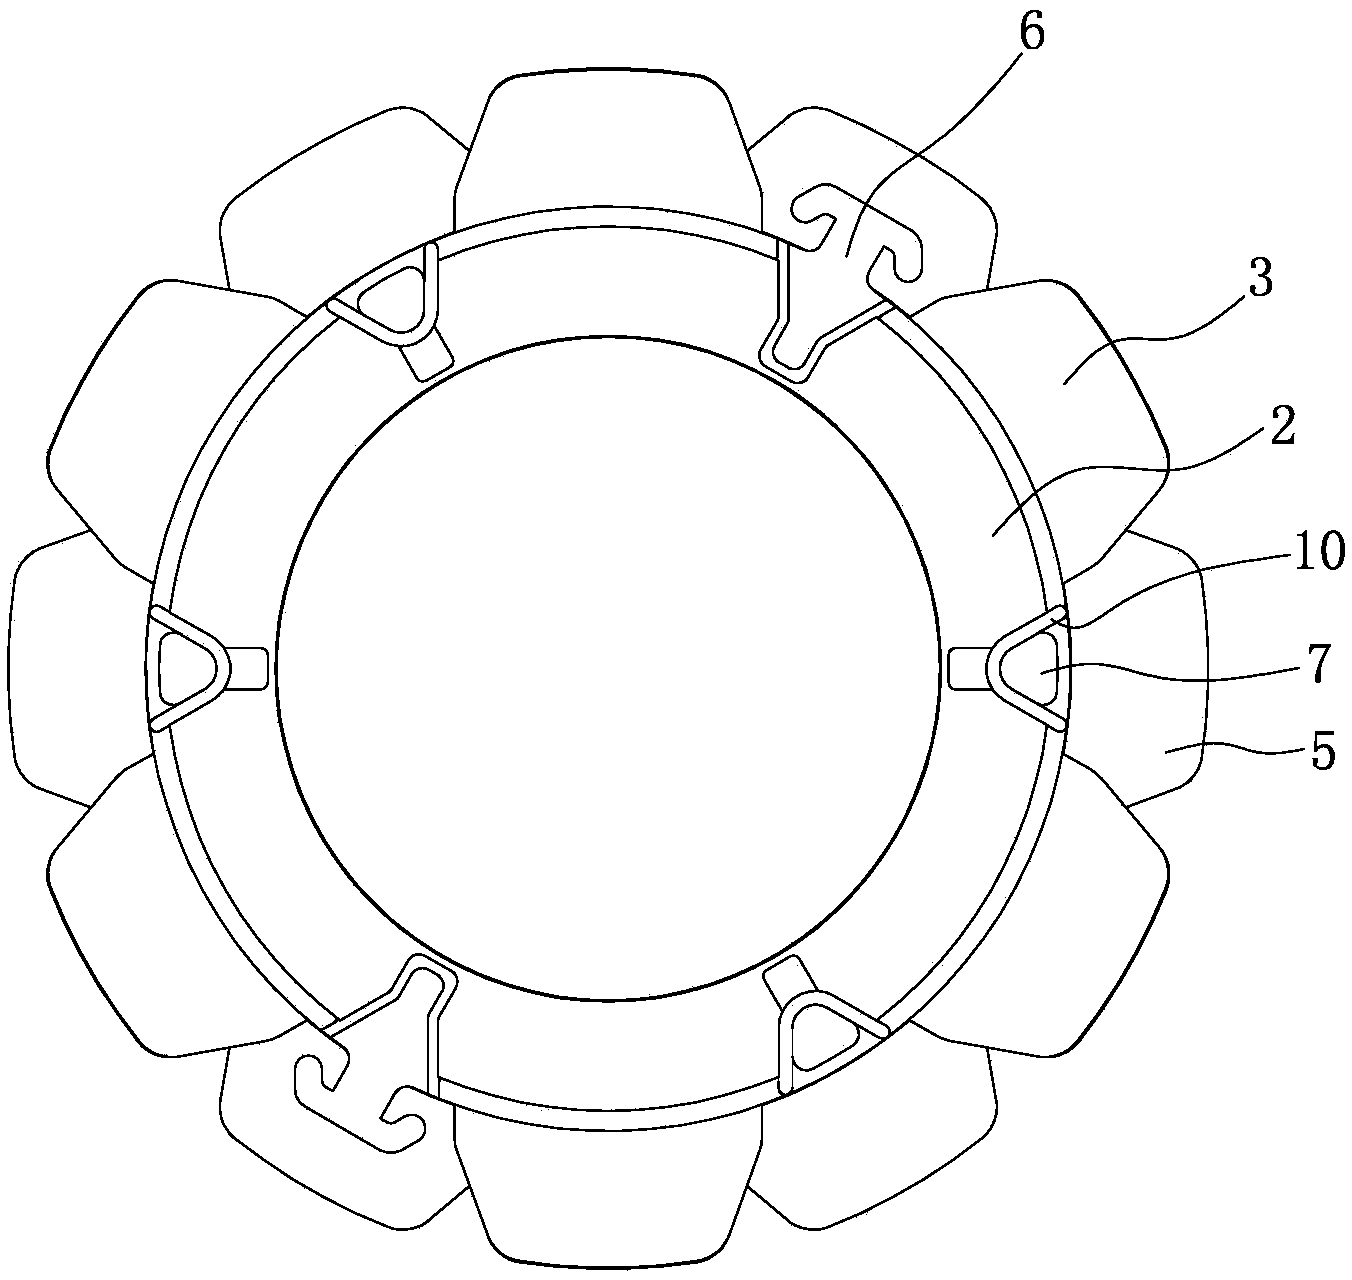 Automobile generator rotor framework